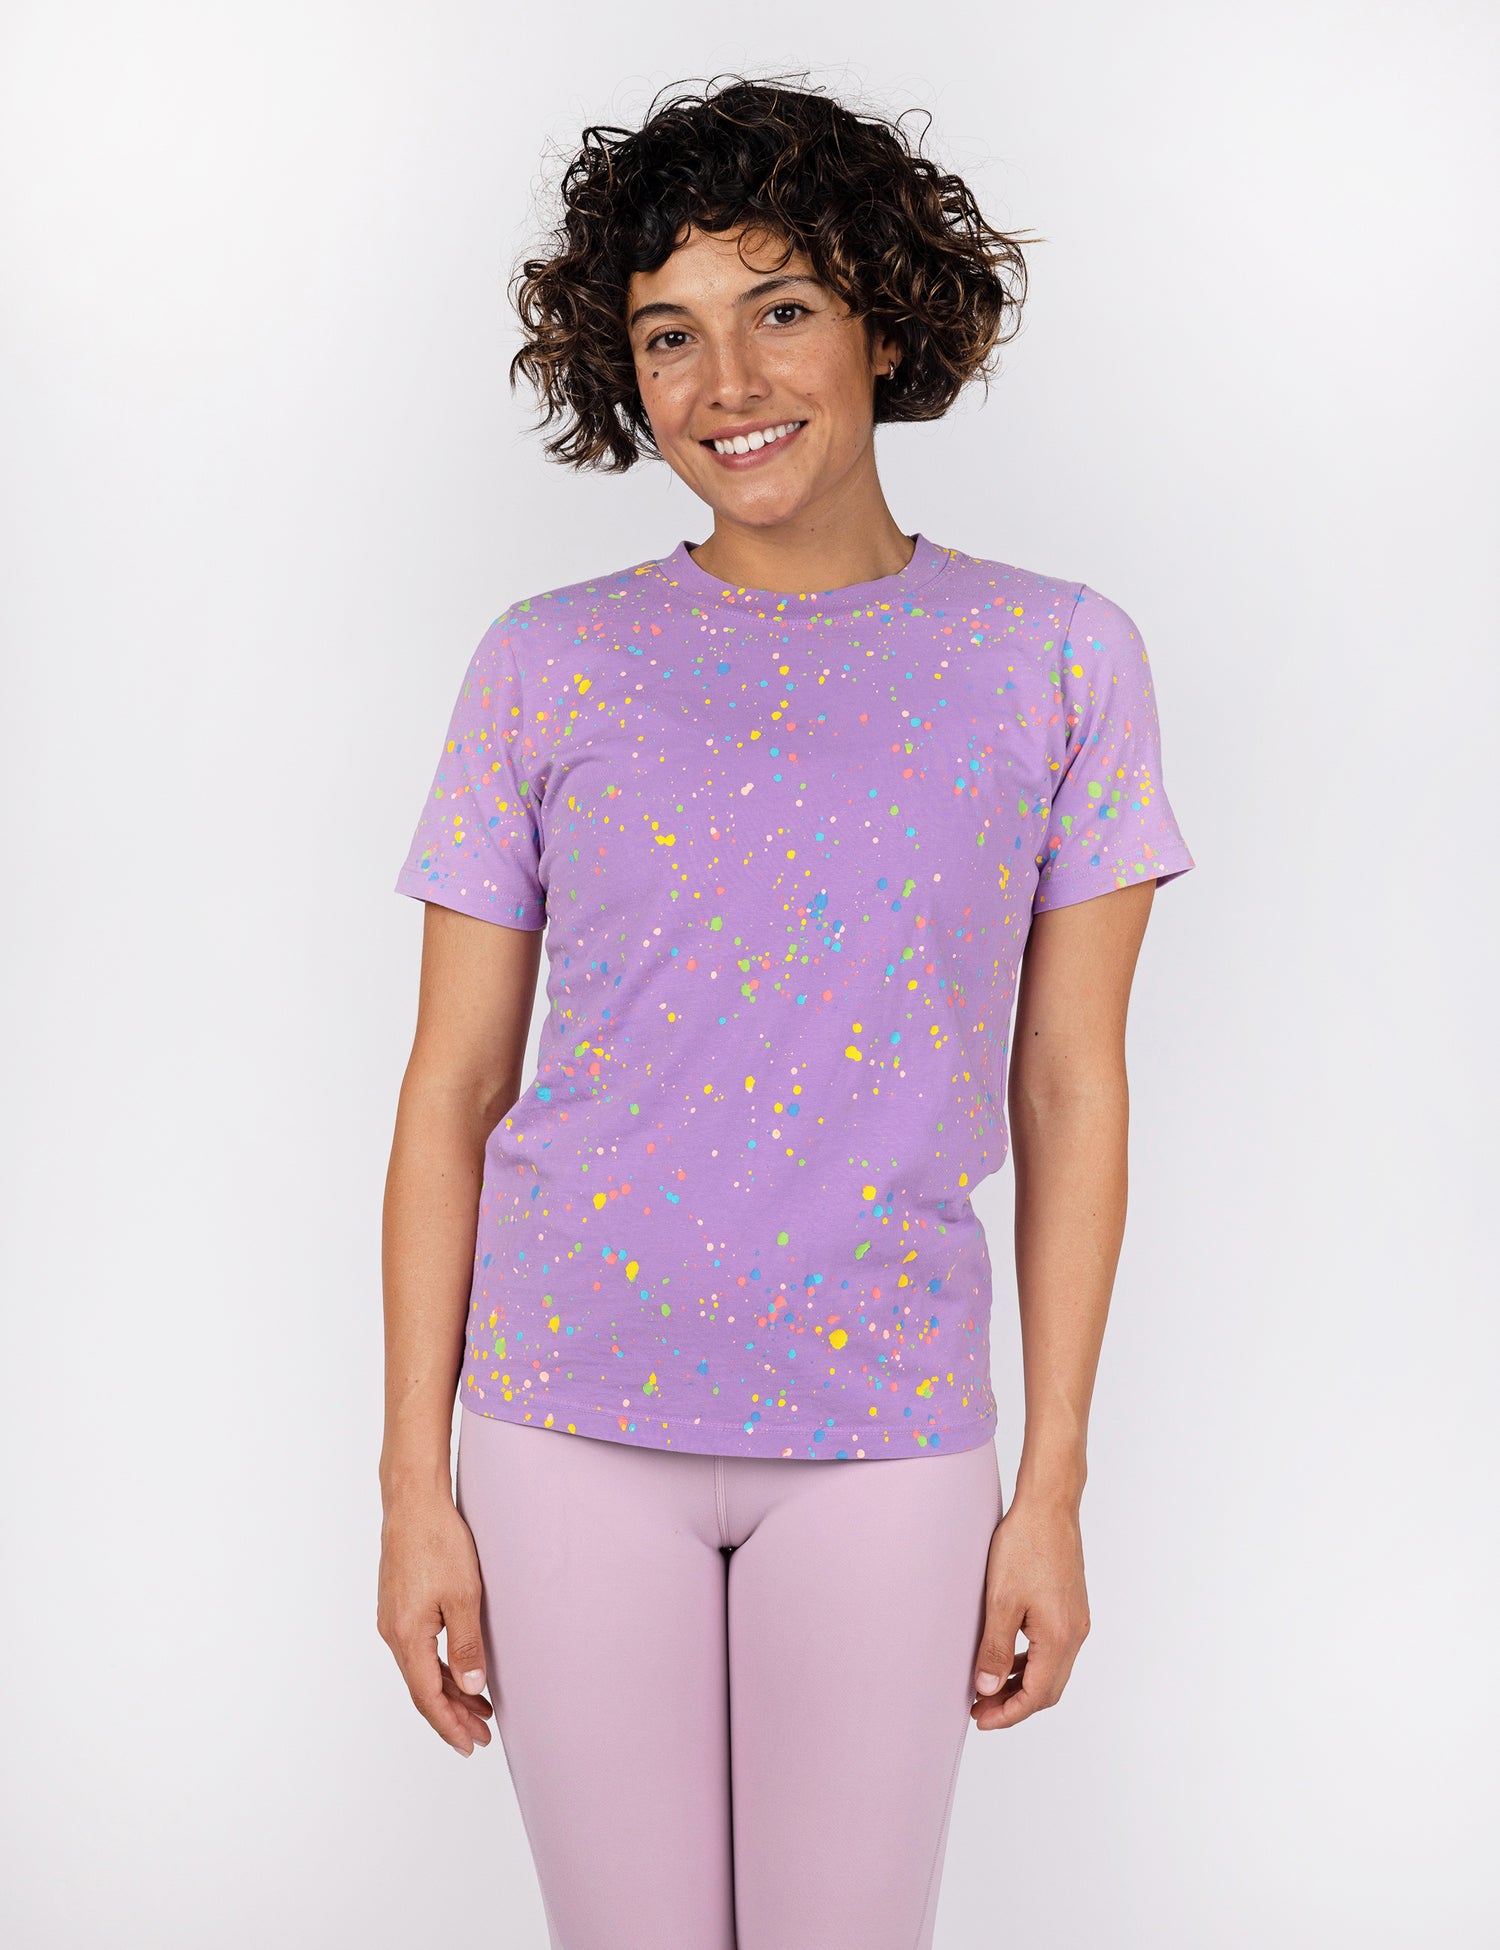 woman in purple t shirt with confetti design